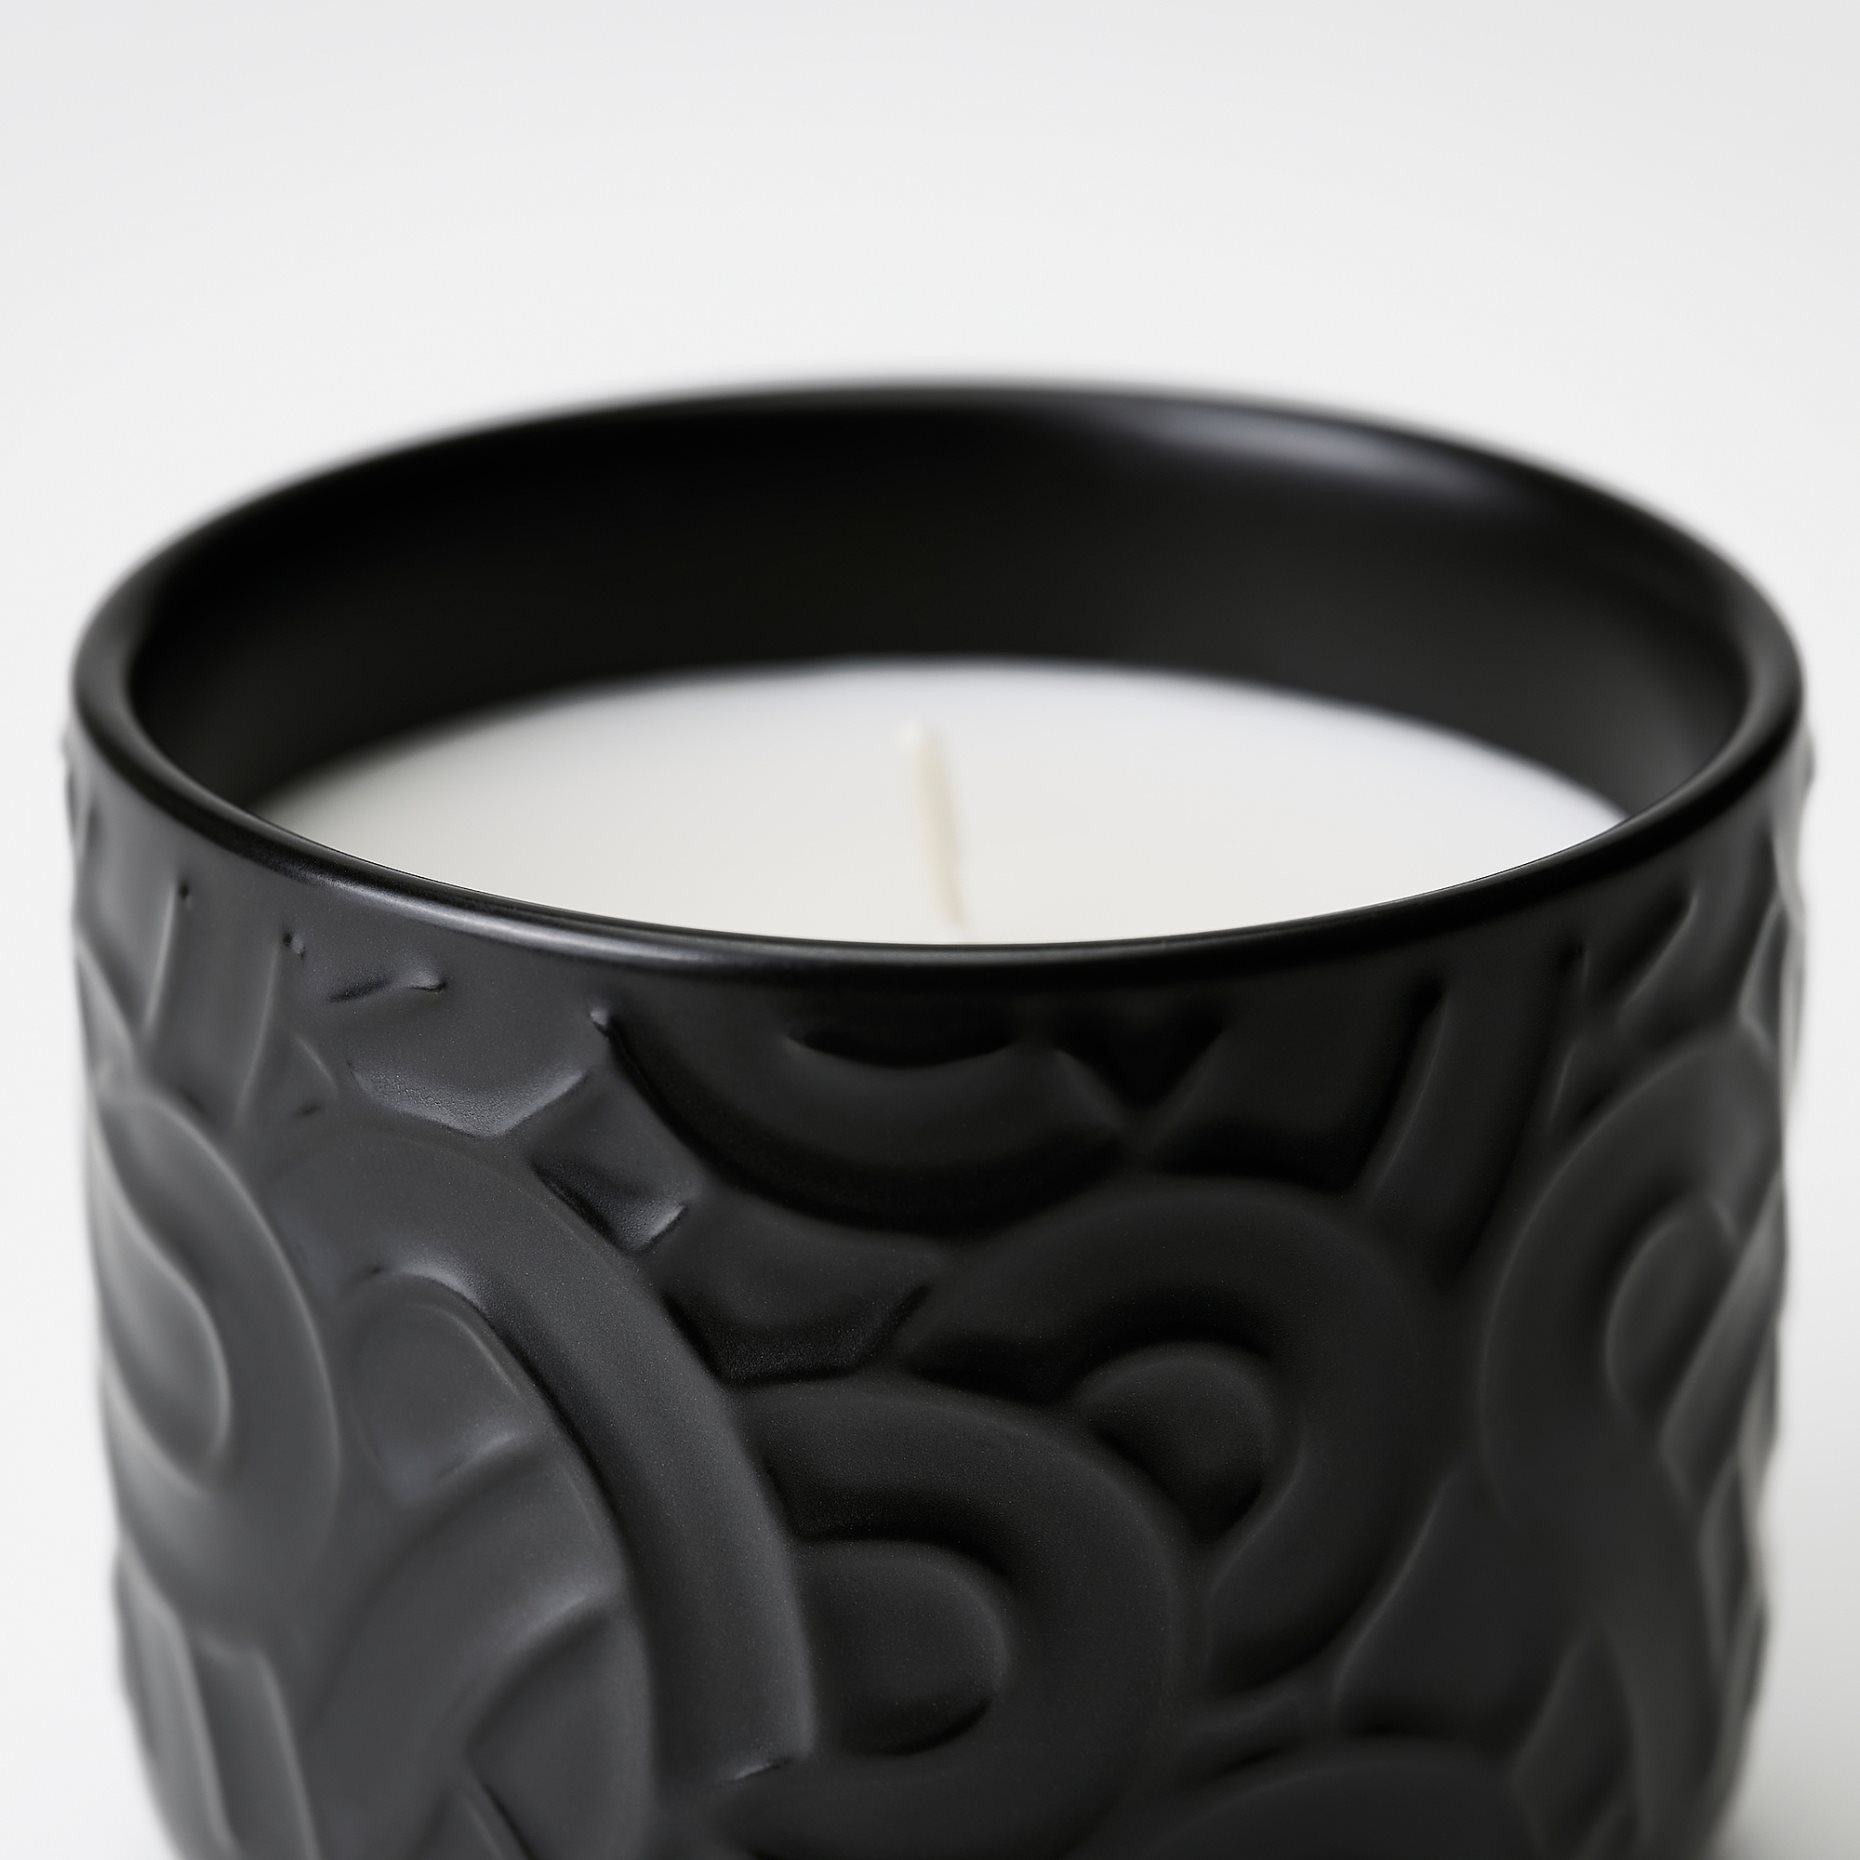 SOTRONN, ароматна свещ в керамична чашка, чай матча и джинджифил, 305.623.67